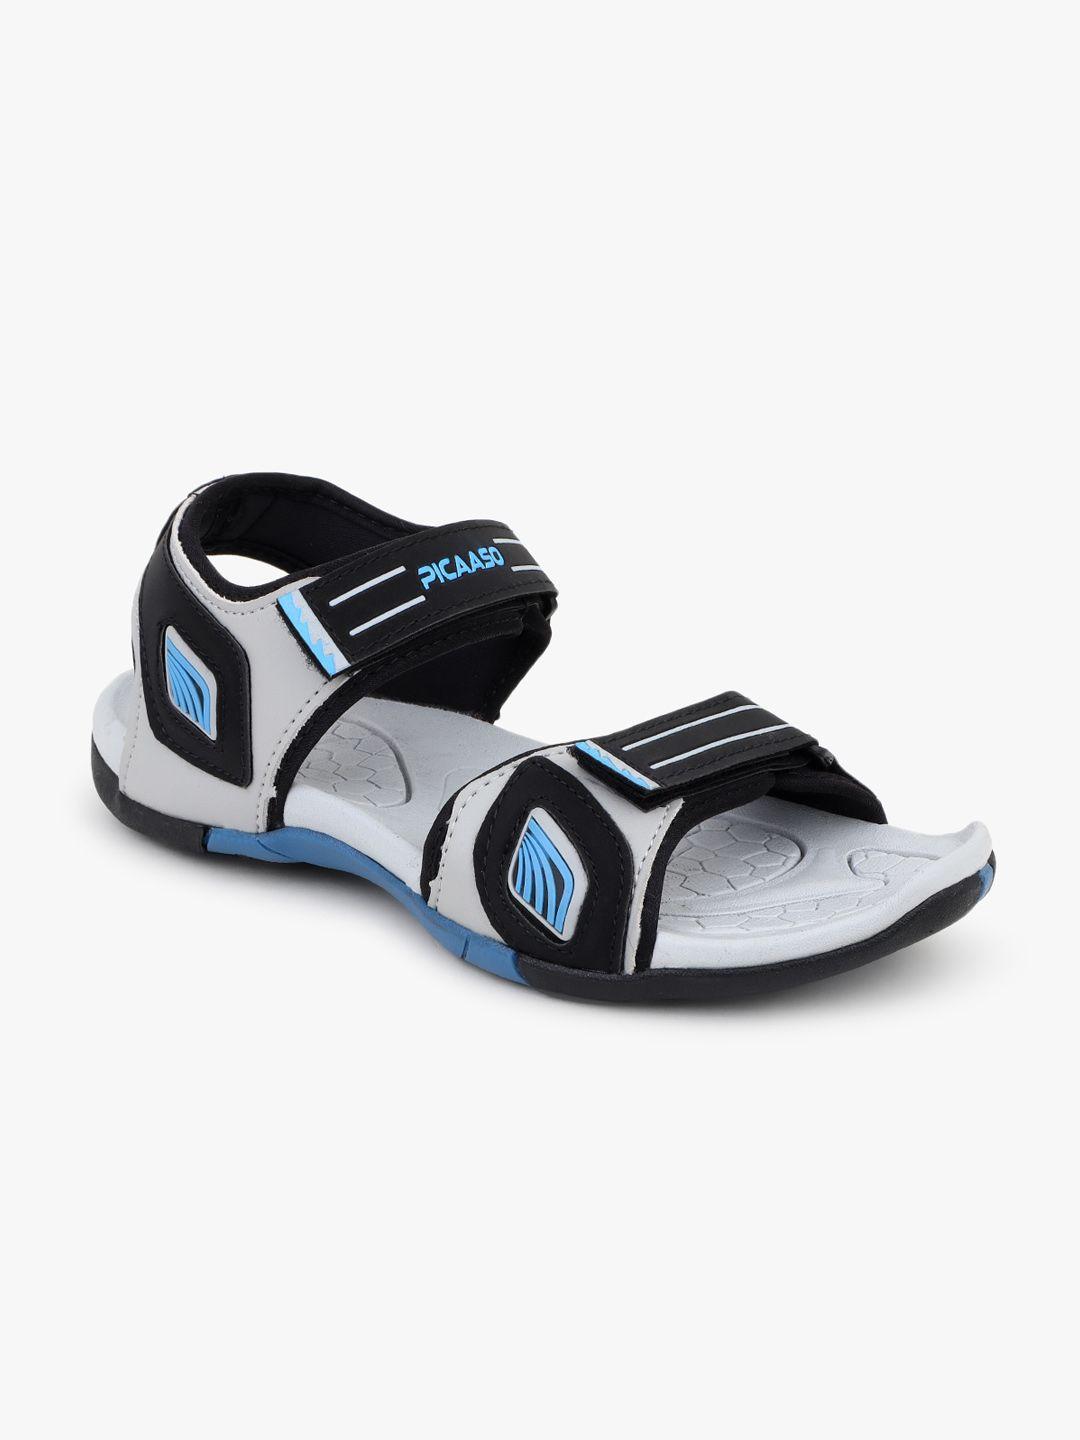 picaaso men colourblocked sports sandals